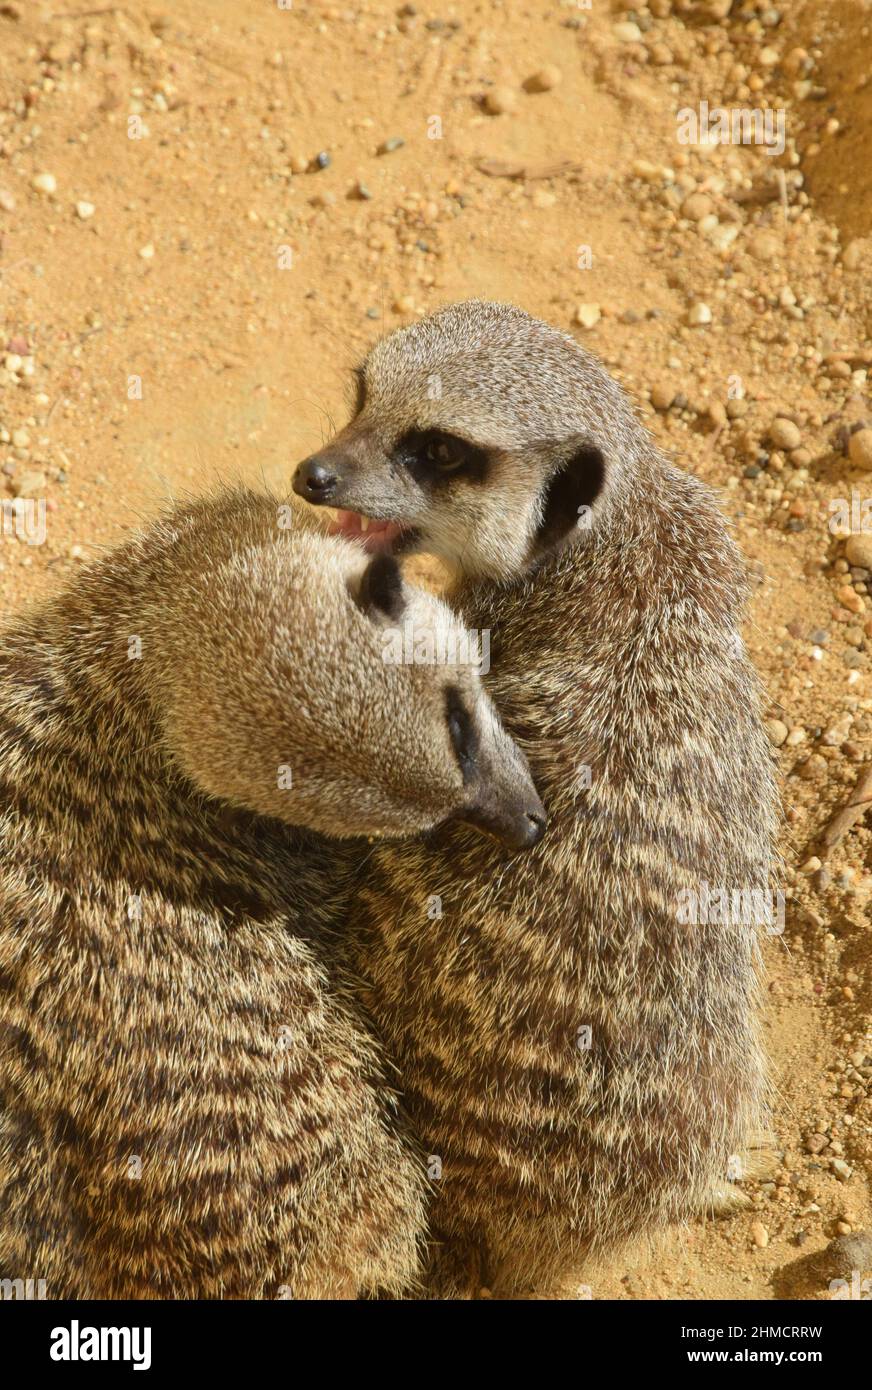 deux meerkats toilettage, angleterre Banque D'Images